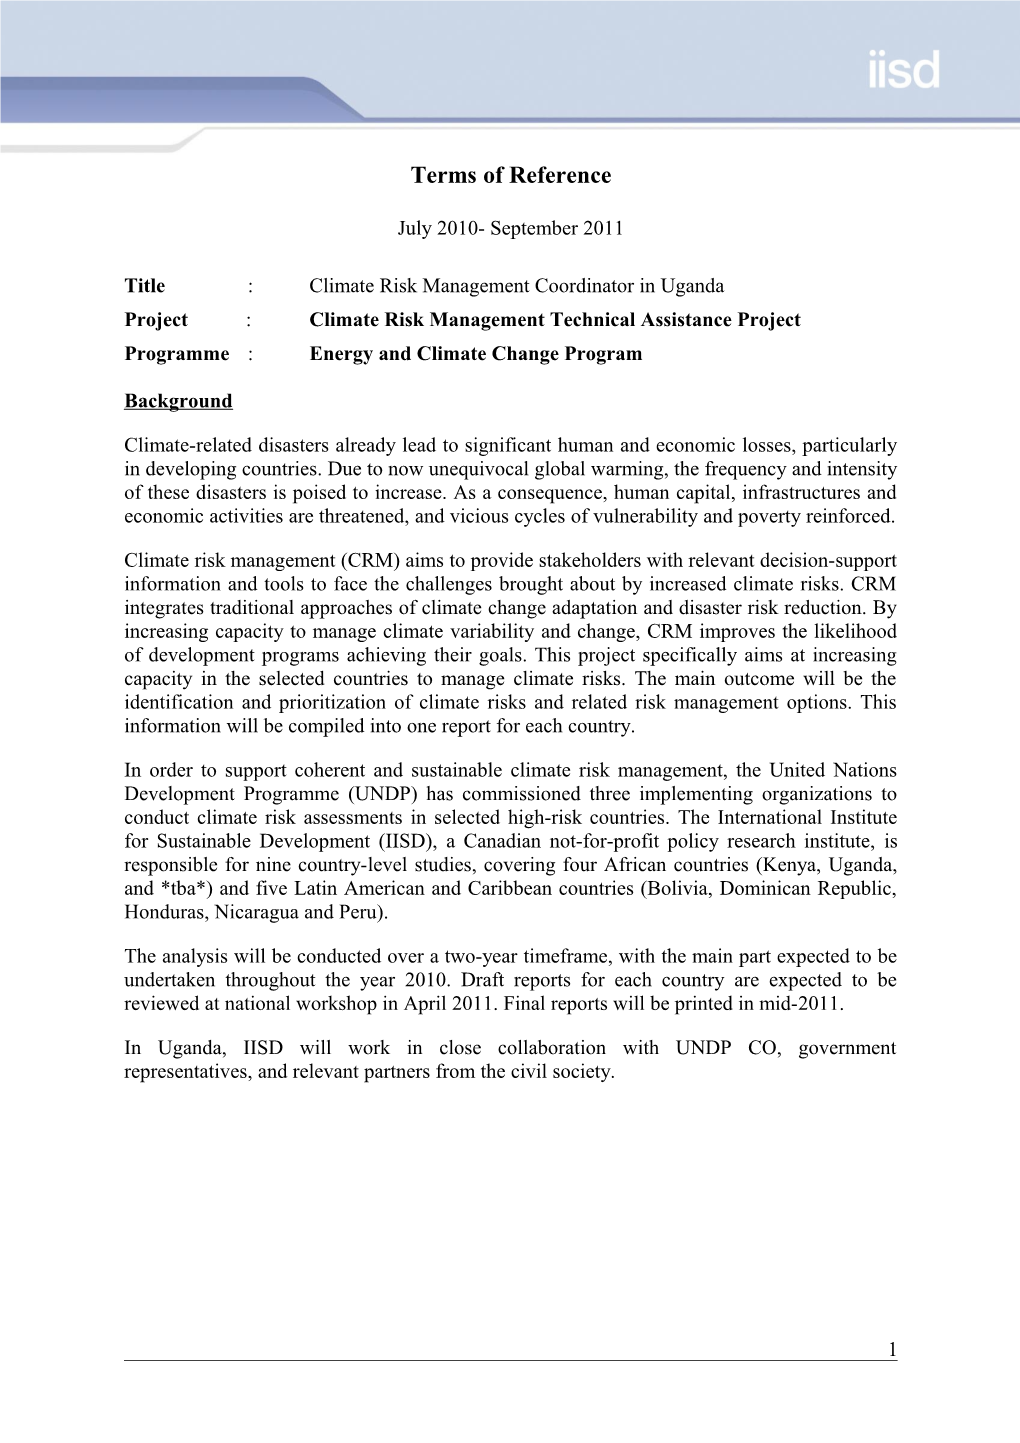 Project:Climate Risk Management Technical Assistance Project